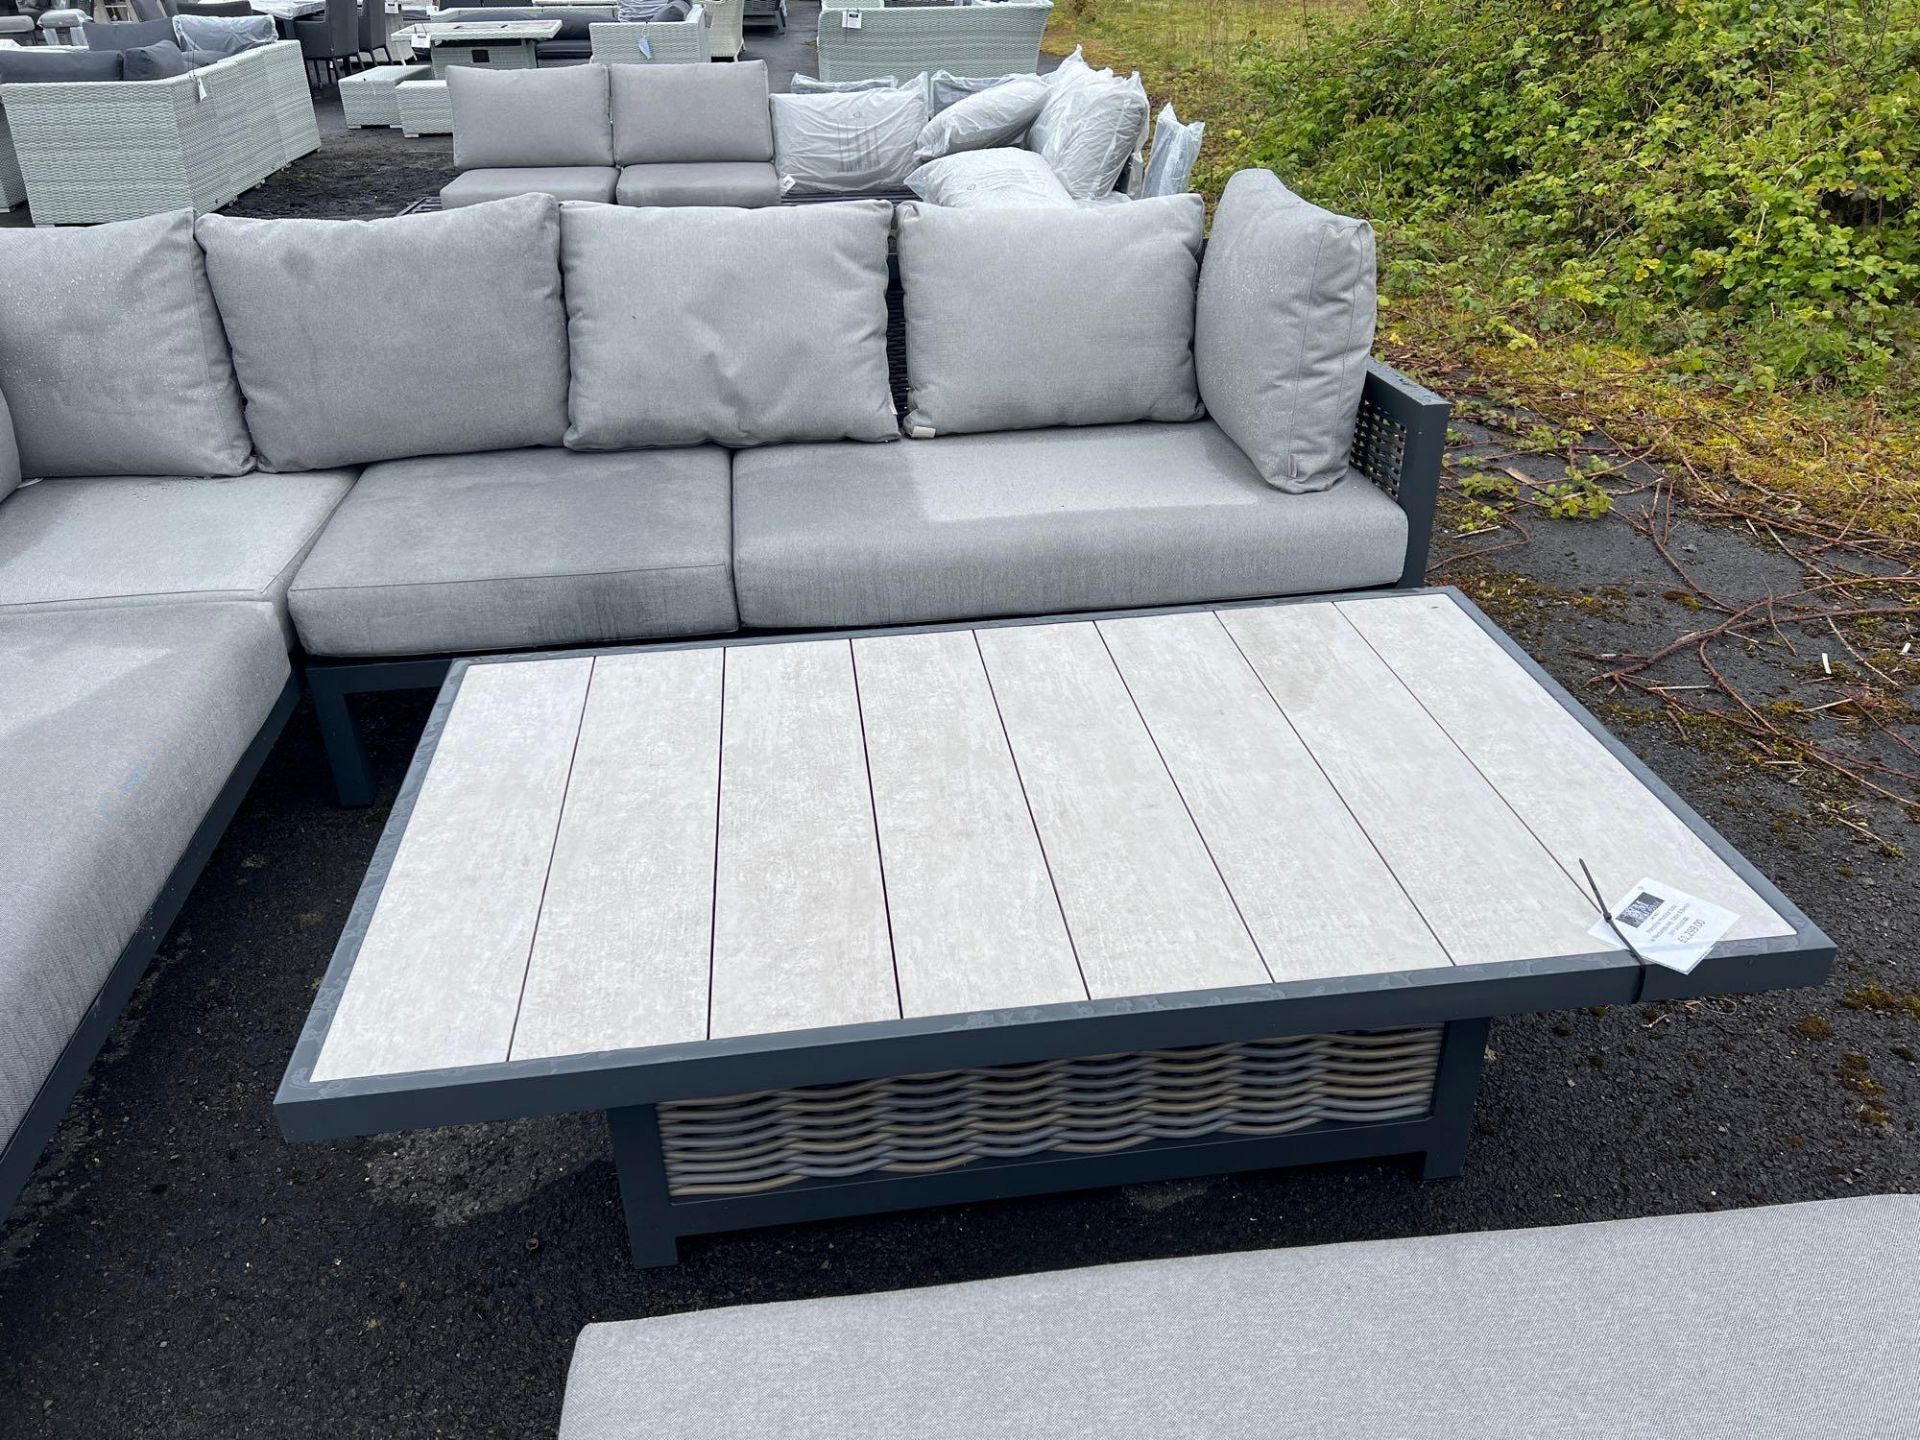 A17 Portofino Modular Sofa with Rectangular Adjustable table and bench - Image 2 of 4